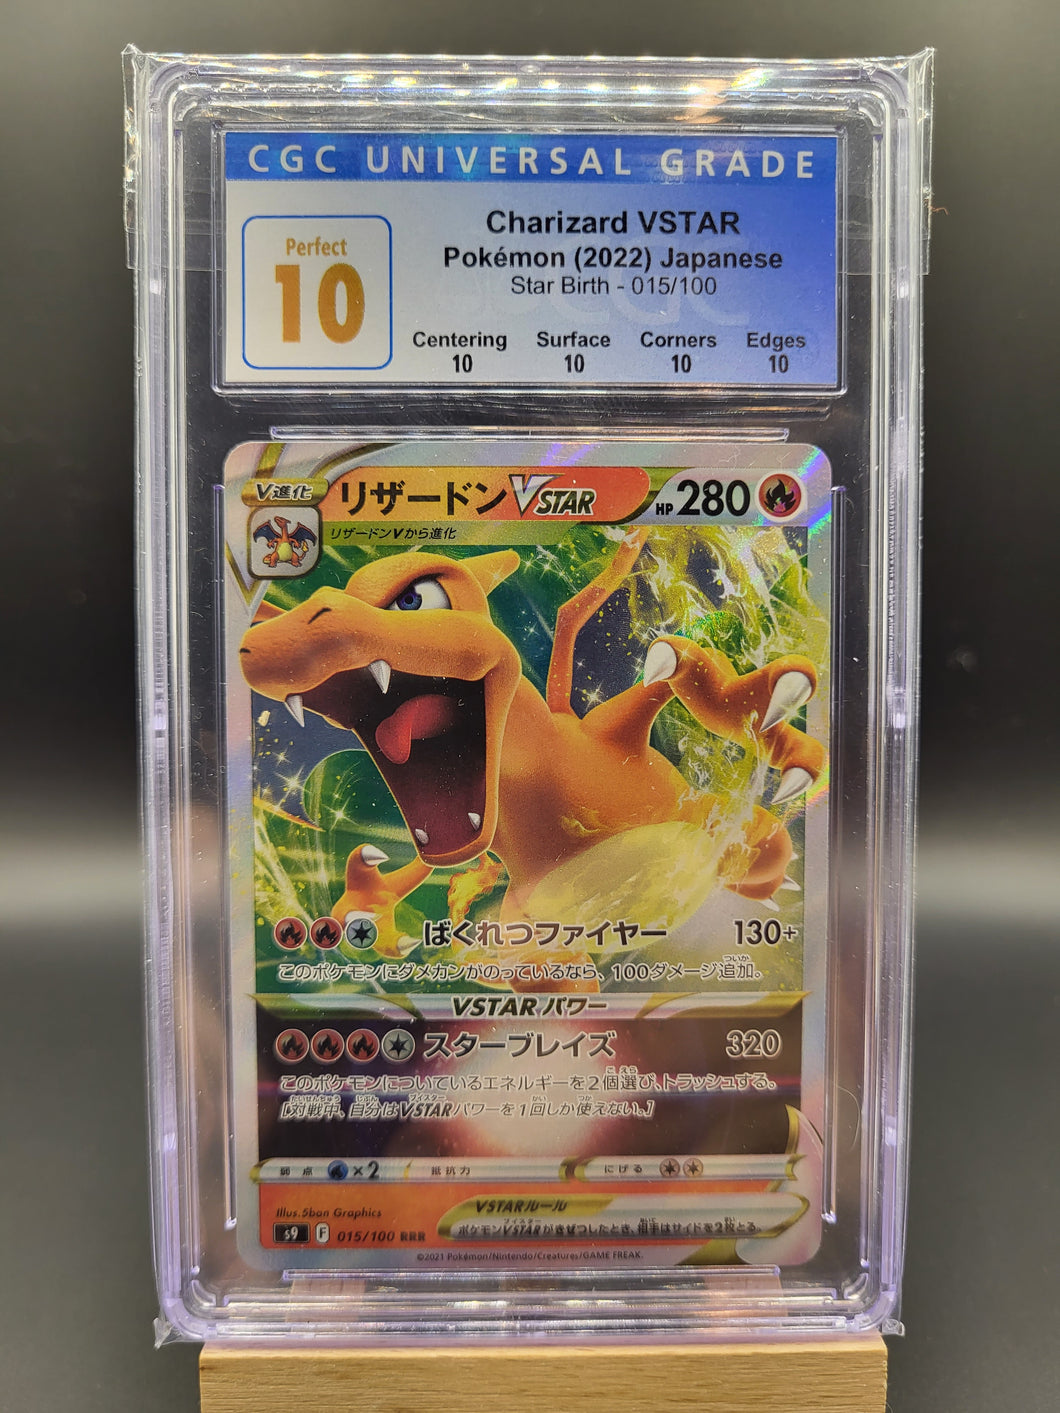 CGC PERFECT 10 Charizard VSTAR - Star Birth 015/100 Japanese